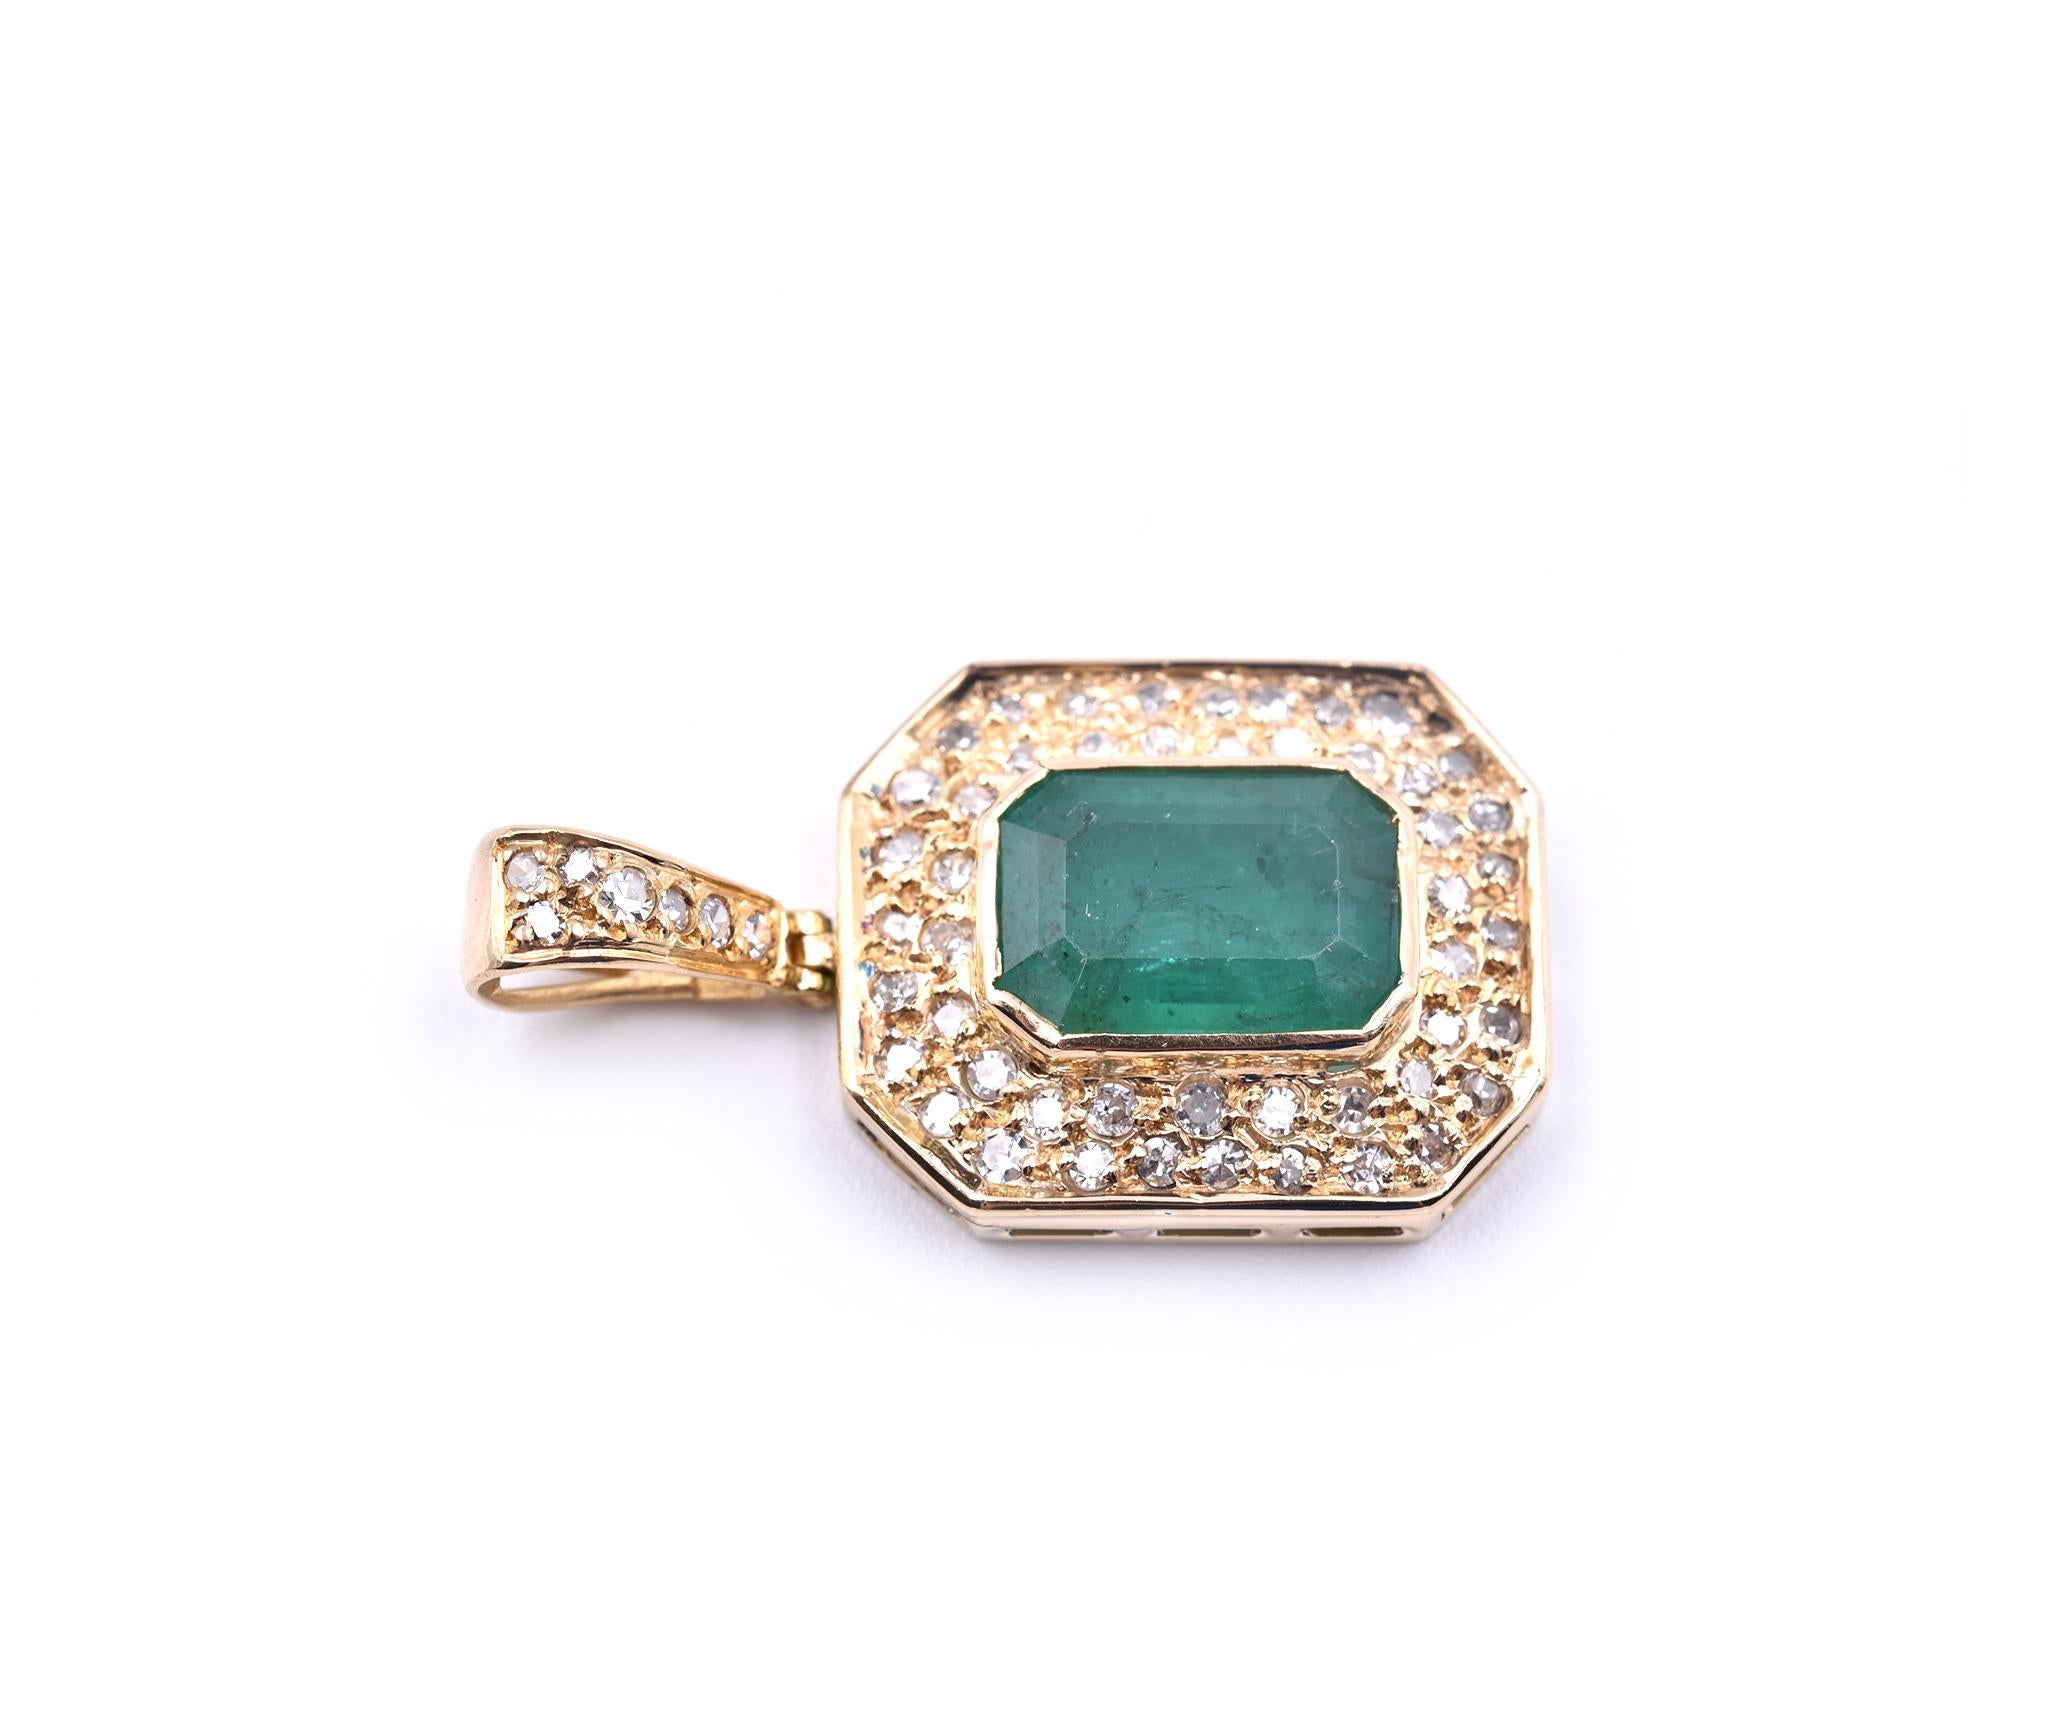 Designer: custom design
Material: 18k yellow gold
Emerald: 1 emerald cut = 3.00ct
Diamonds: 56 round brilliant cuts = 0.50cttw
Color: H-I
Dimensions: pendant measures 16.40mm x 30.30mm
Weight: 4.43 grams
